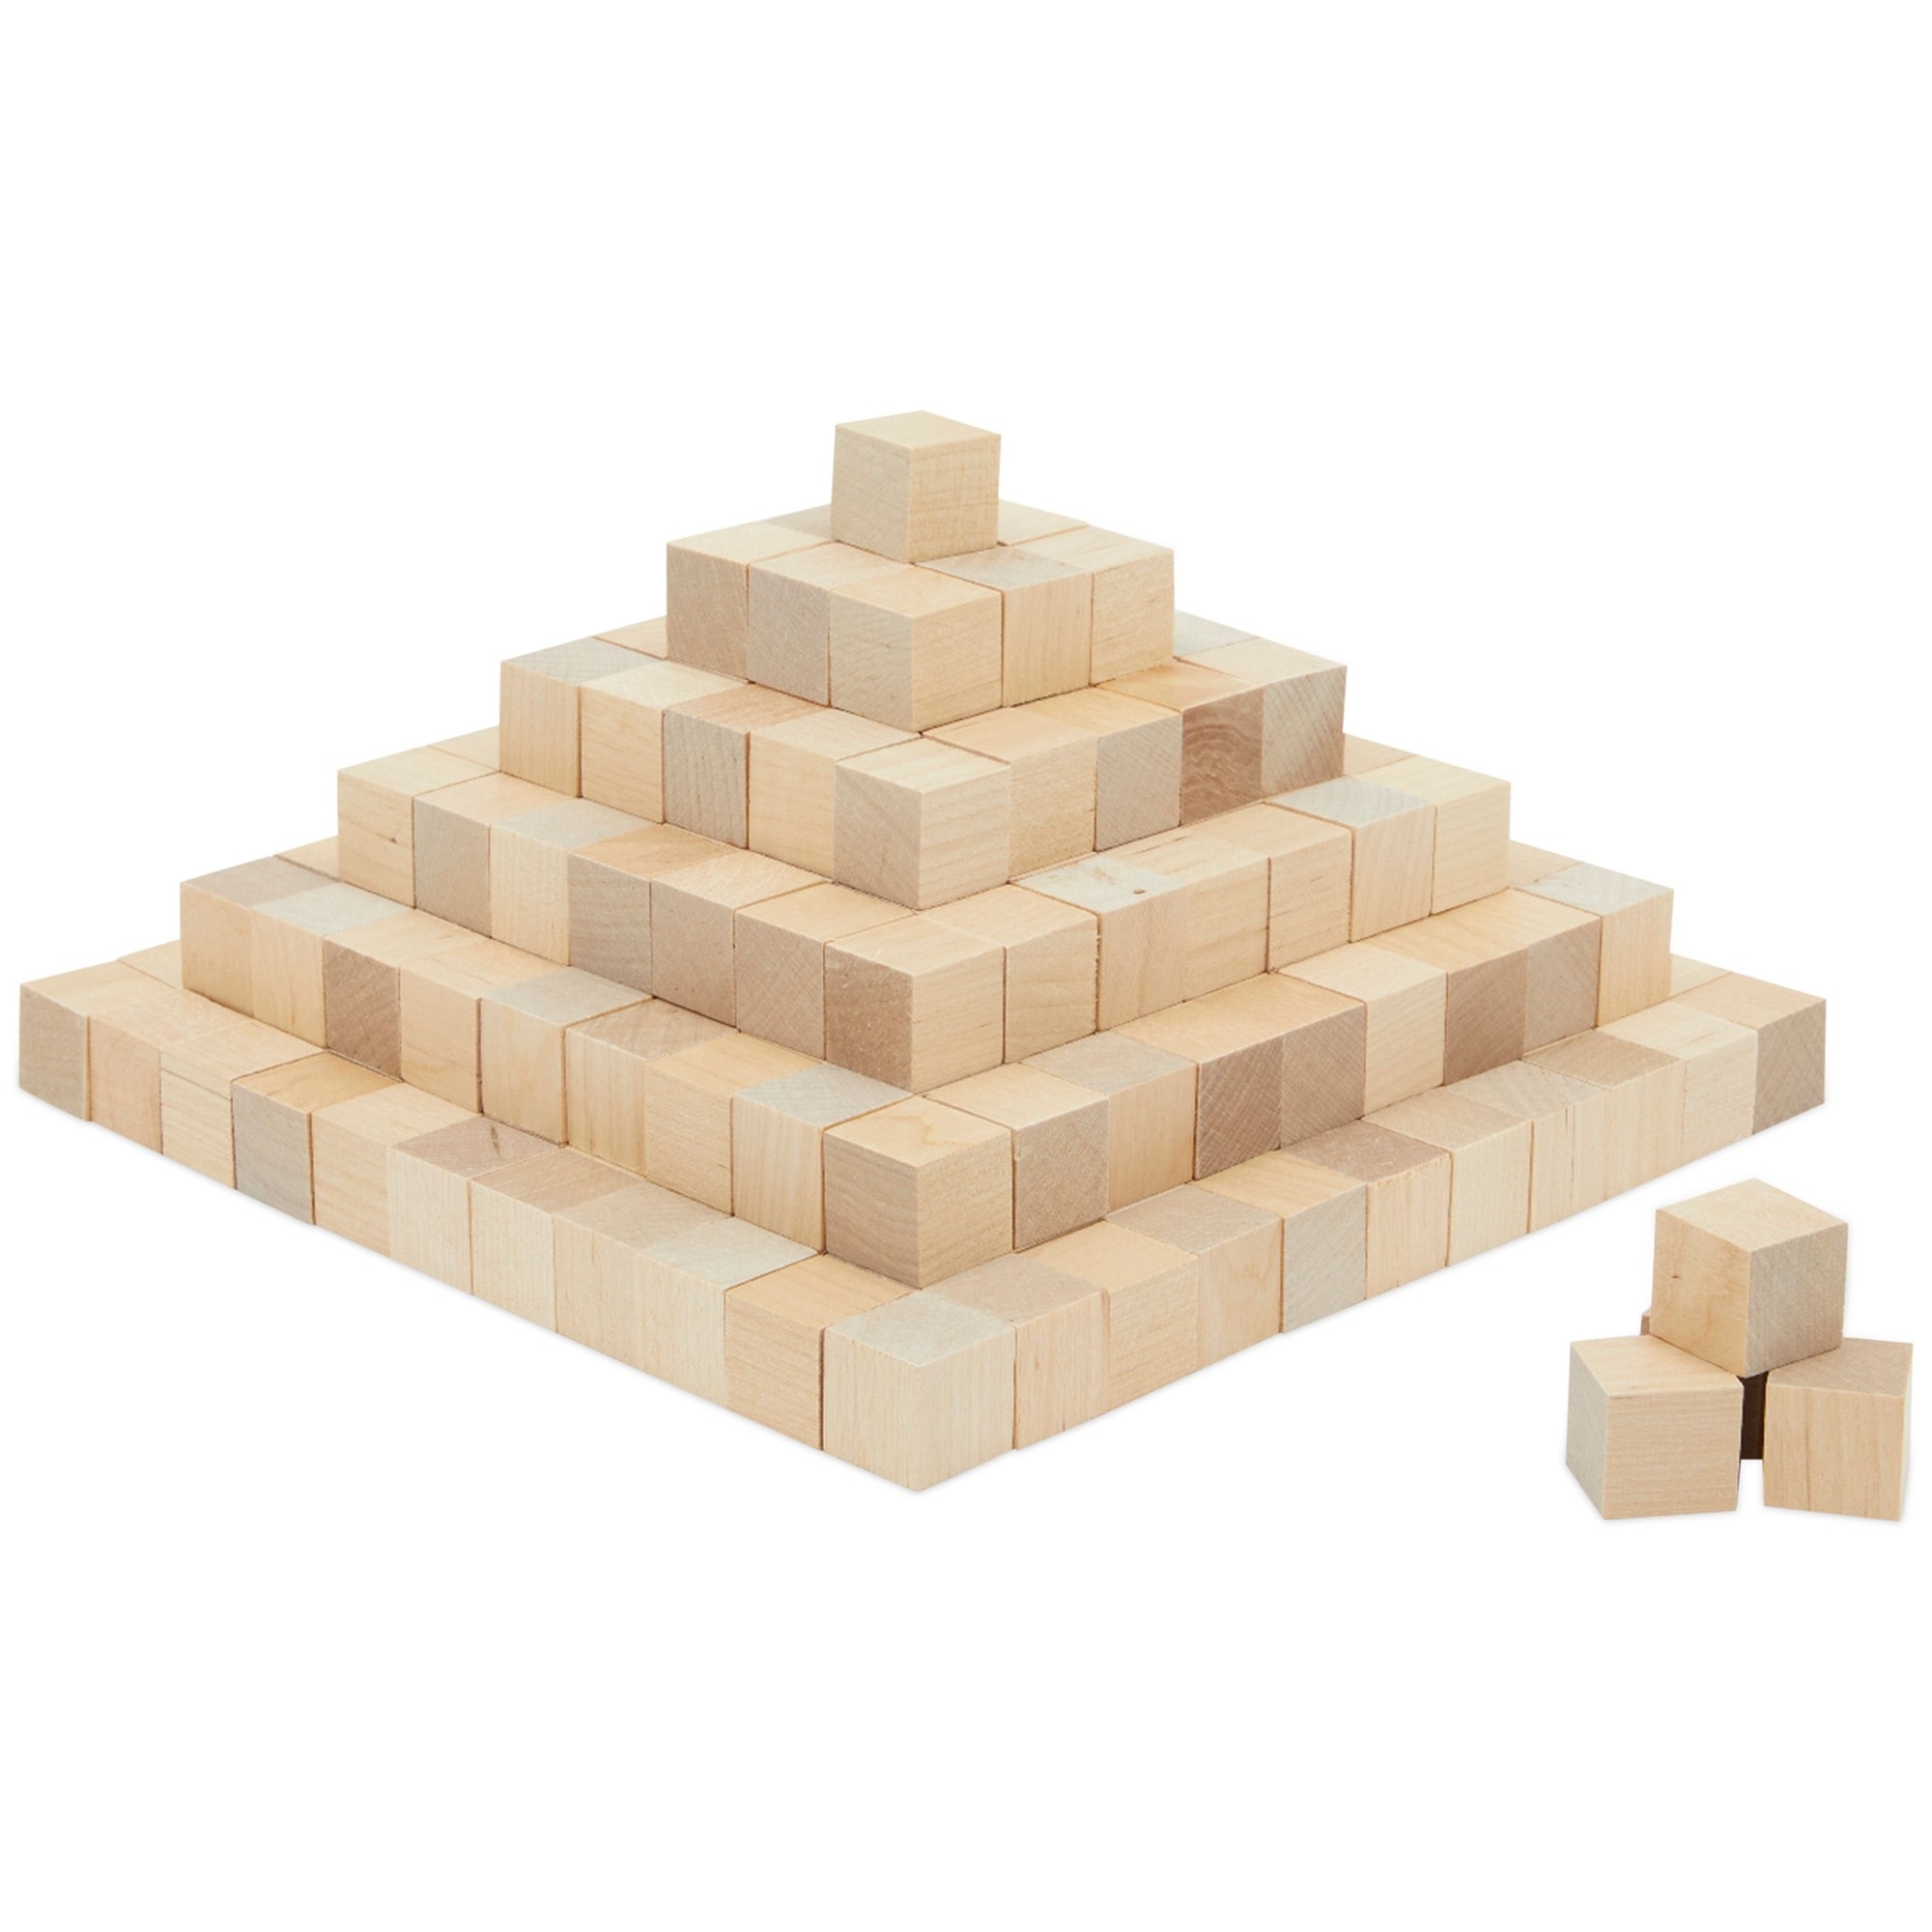 4x4 Unfinished Wood Block Sets/wood Squares/sign Blanks 